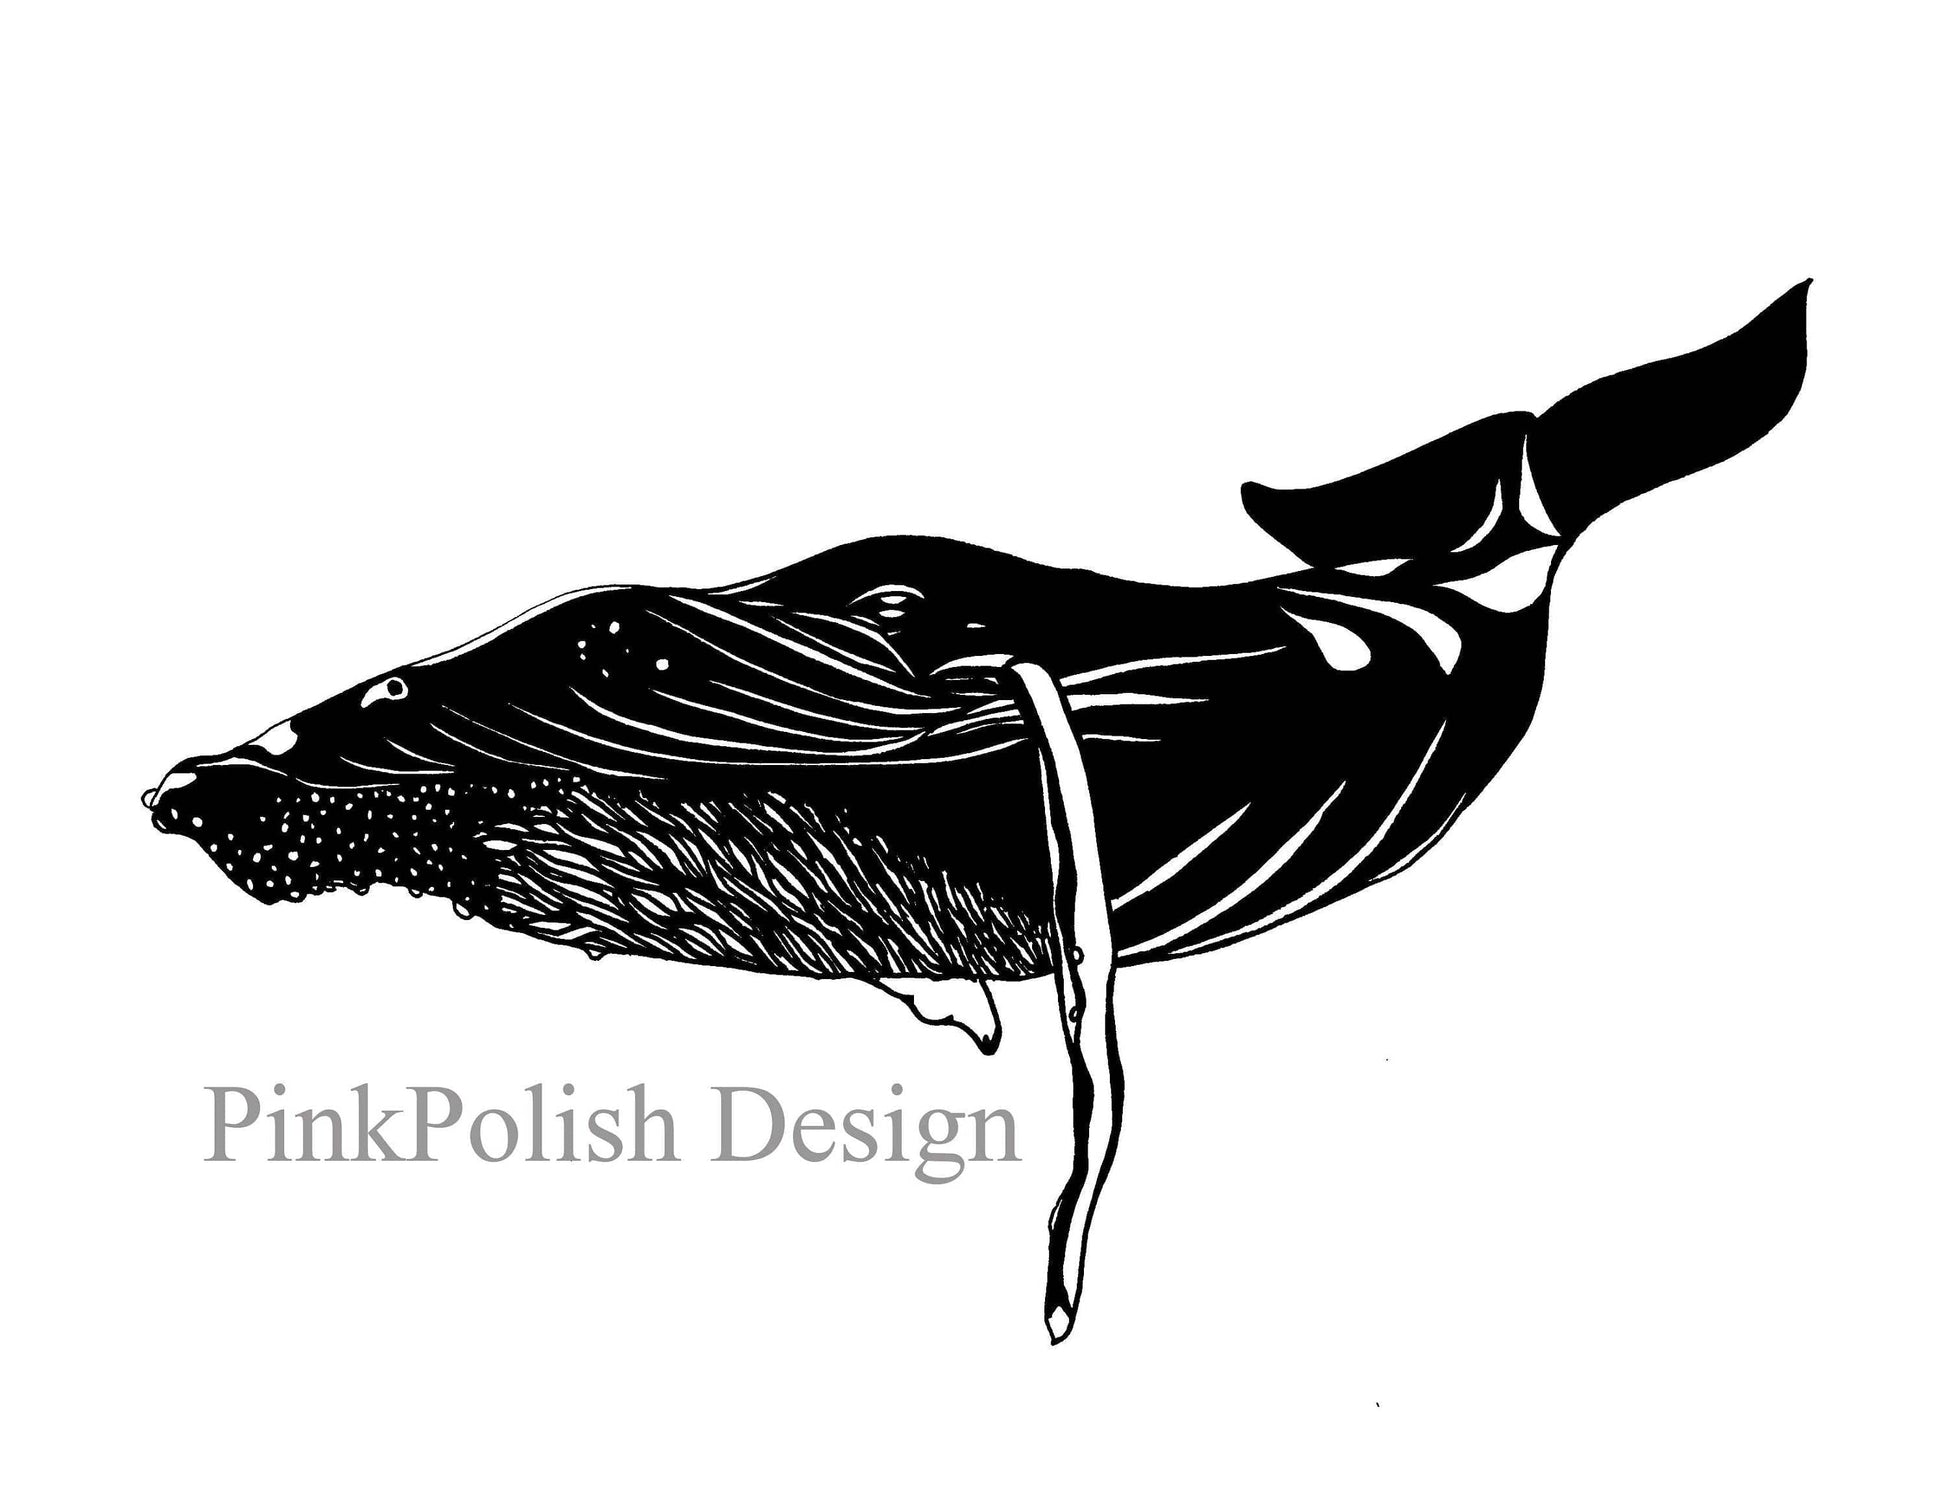 PinkPolish Design Art Prints "Humpback Whale" Ink Drawing: Art Print